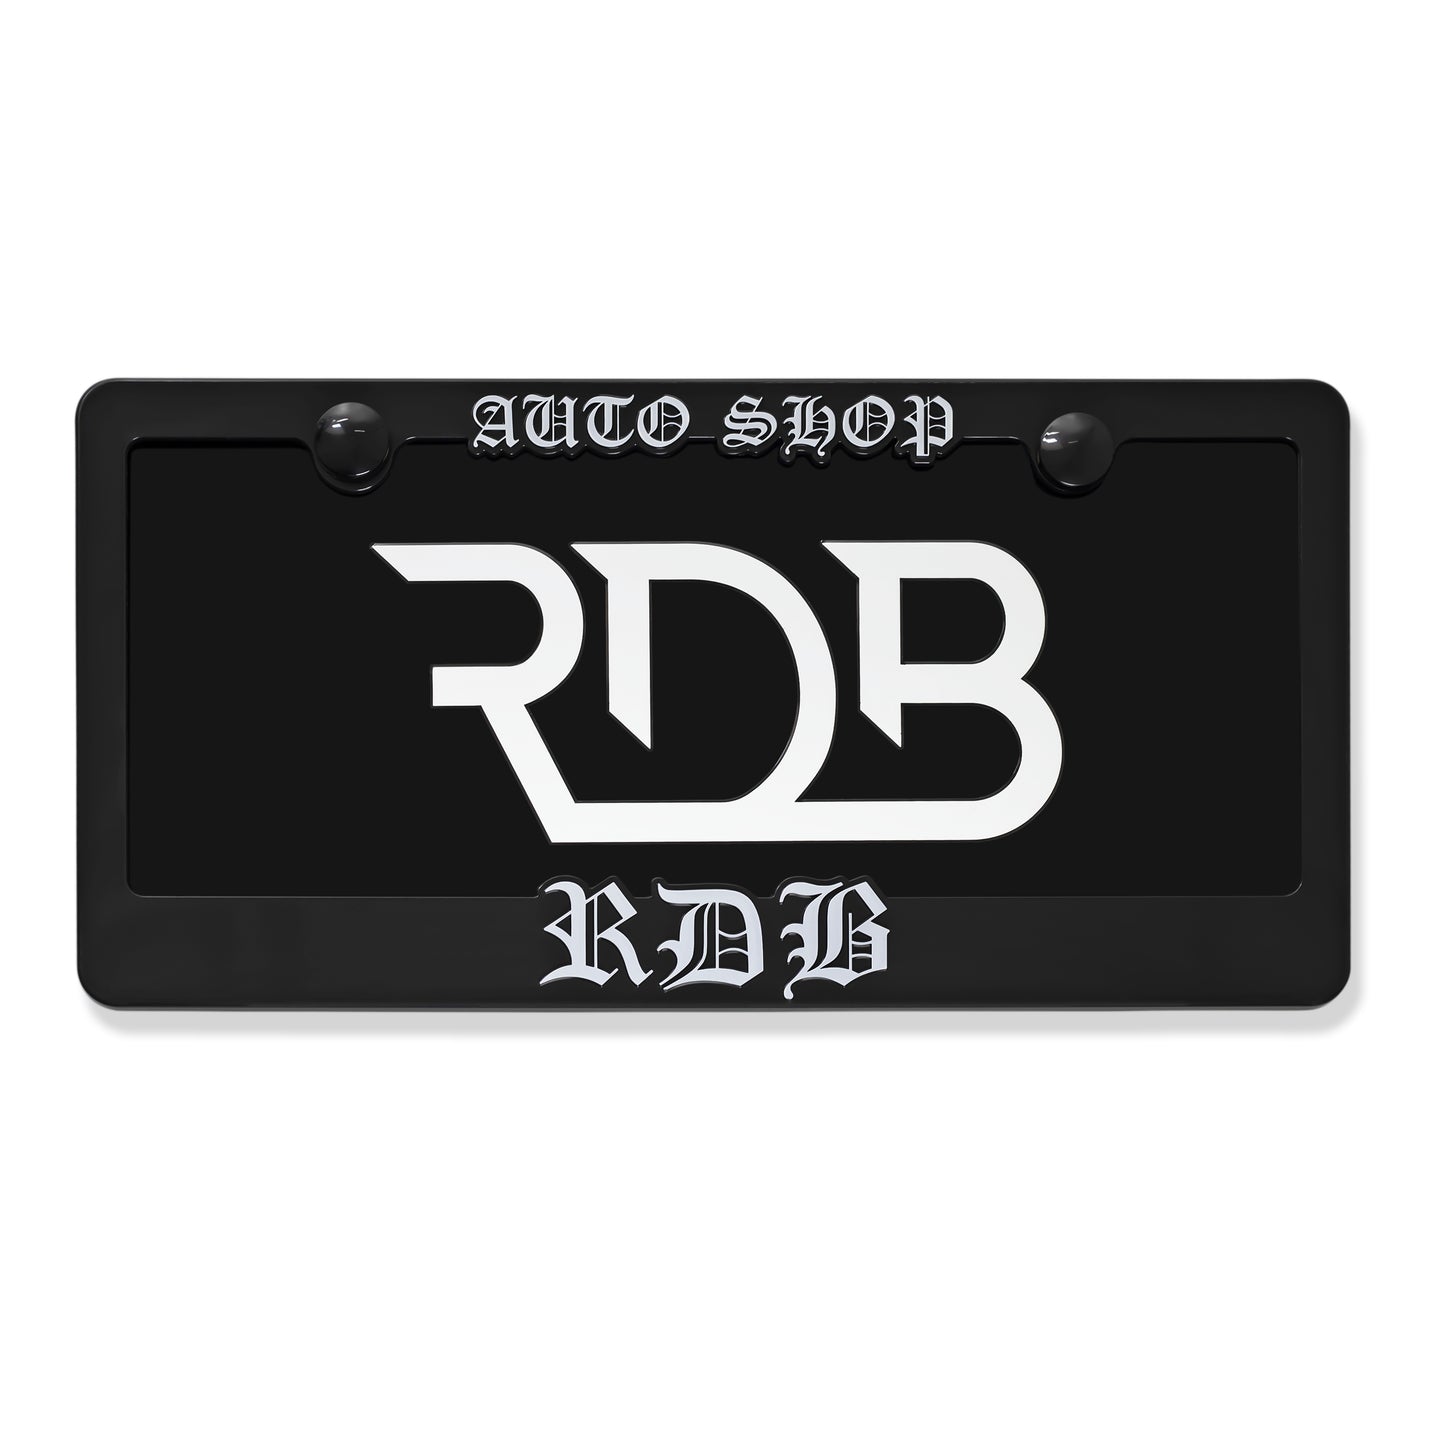 RDB License Plate Frame - Auto Shop